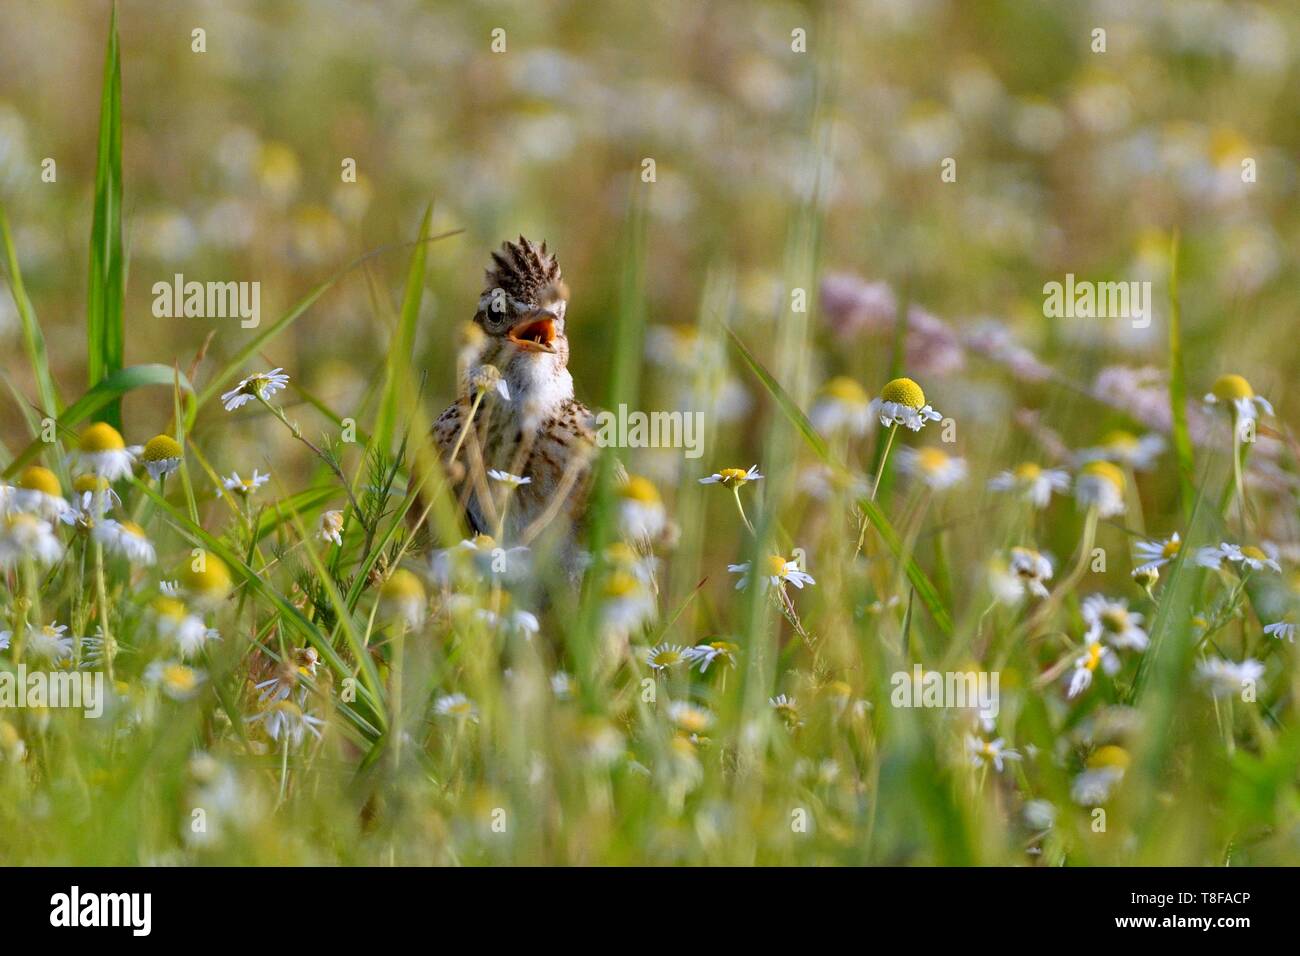 France, Doubs, Eurasian skylark (Alauda arvensis) on the ground, singing Stock Photo